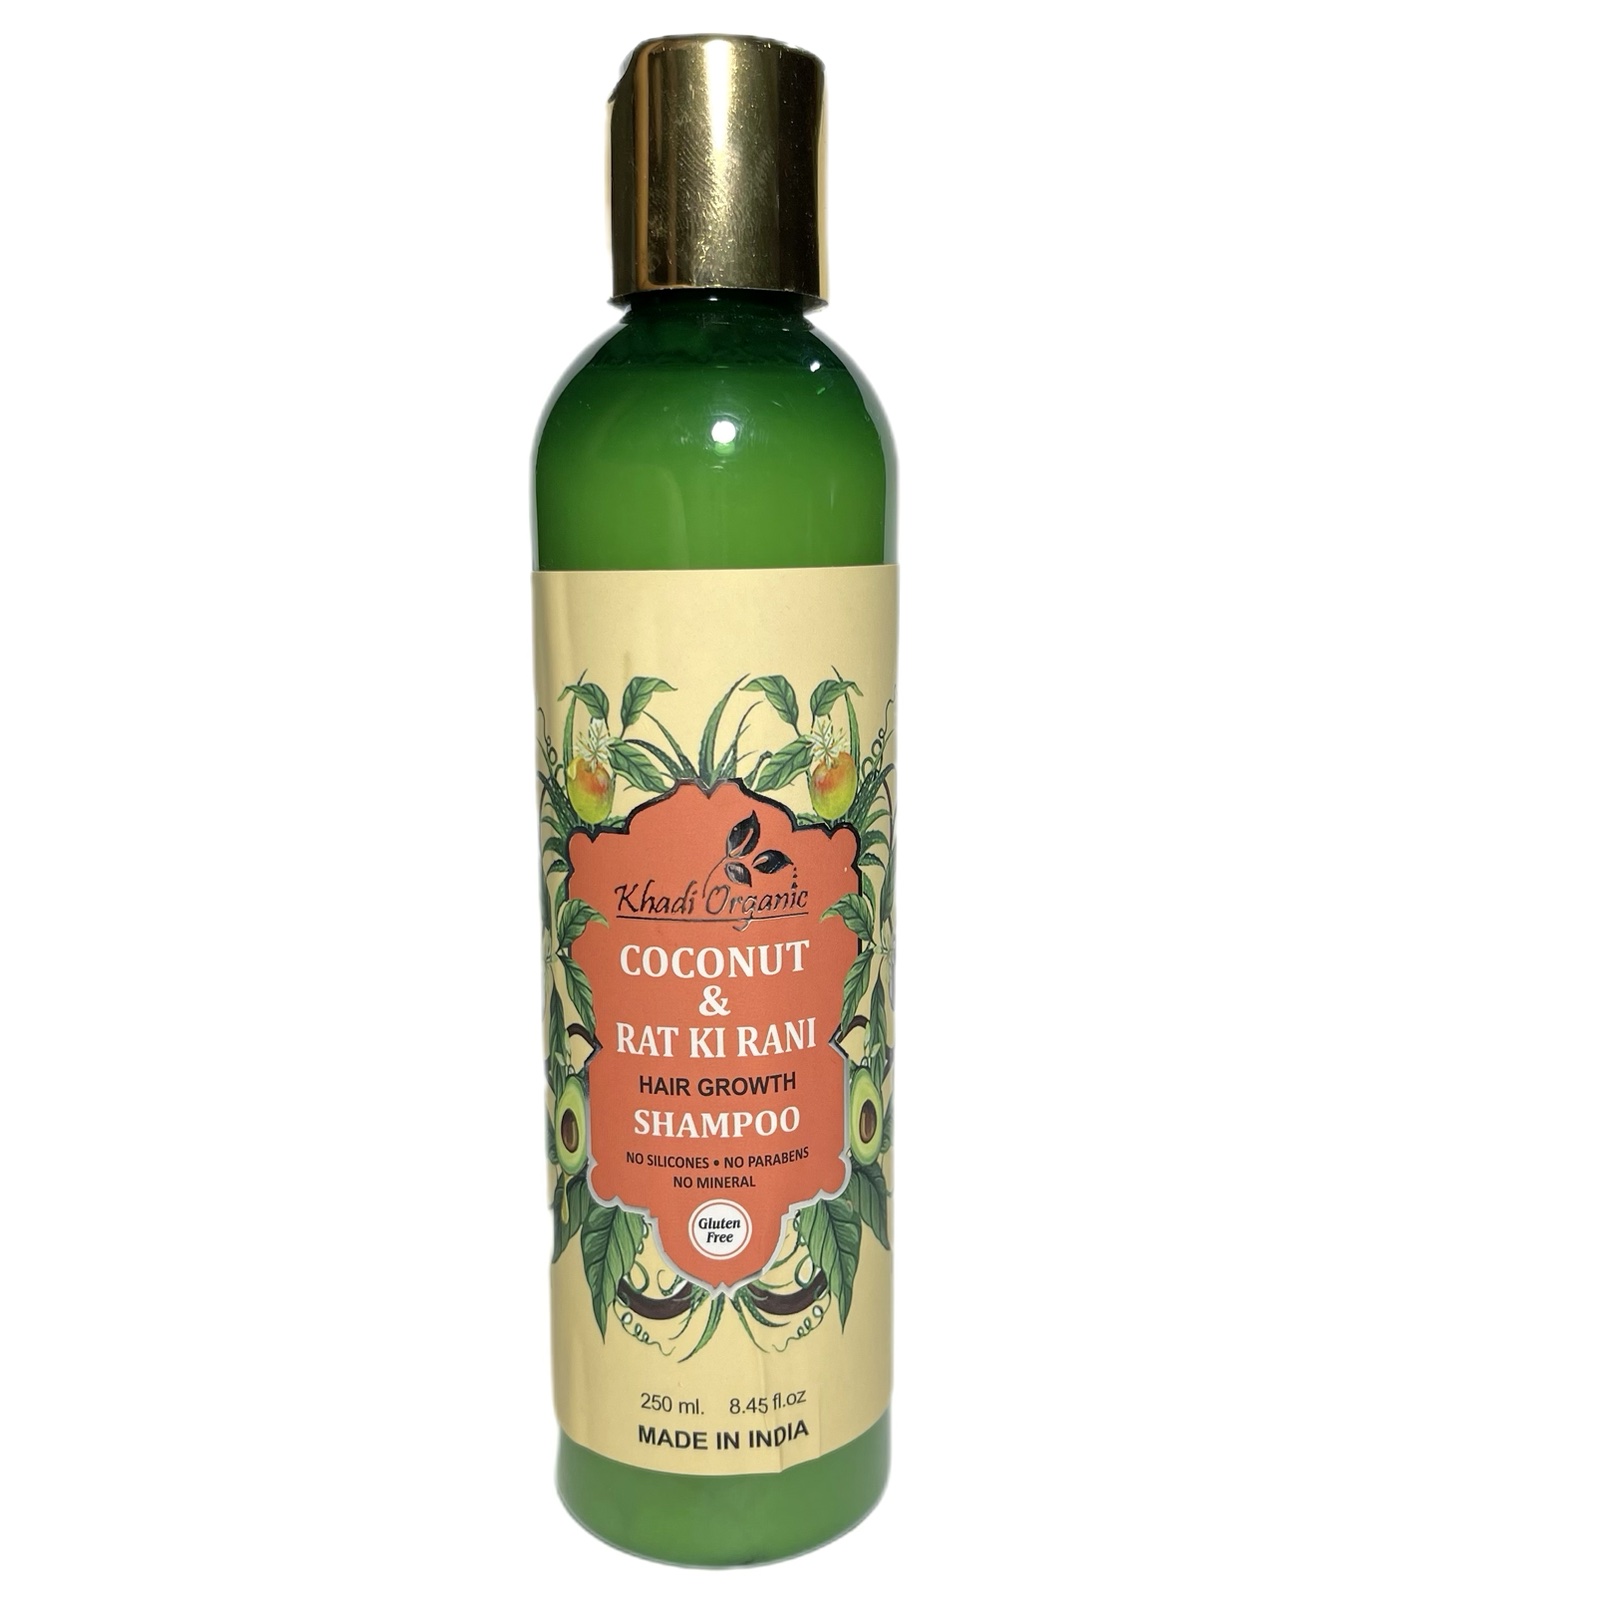 COCONUT & RATKI RANI Hair Growth Shampoo, Khadi Organic (Шампунь КОКОС И РАТКИ РАНИ - для роста волос, Кхади Органик), 250 мл.